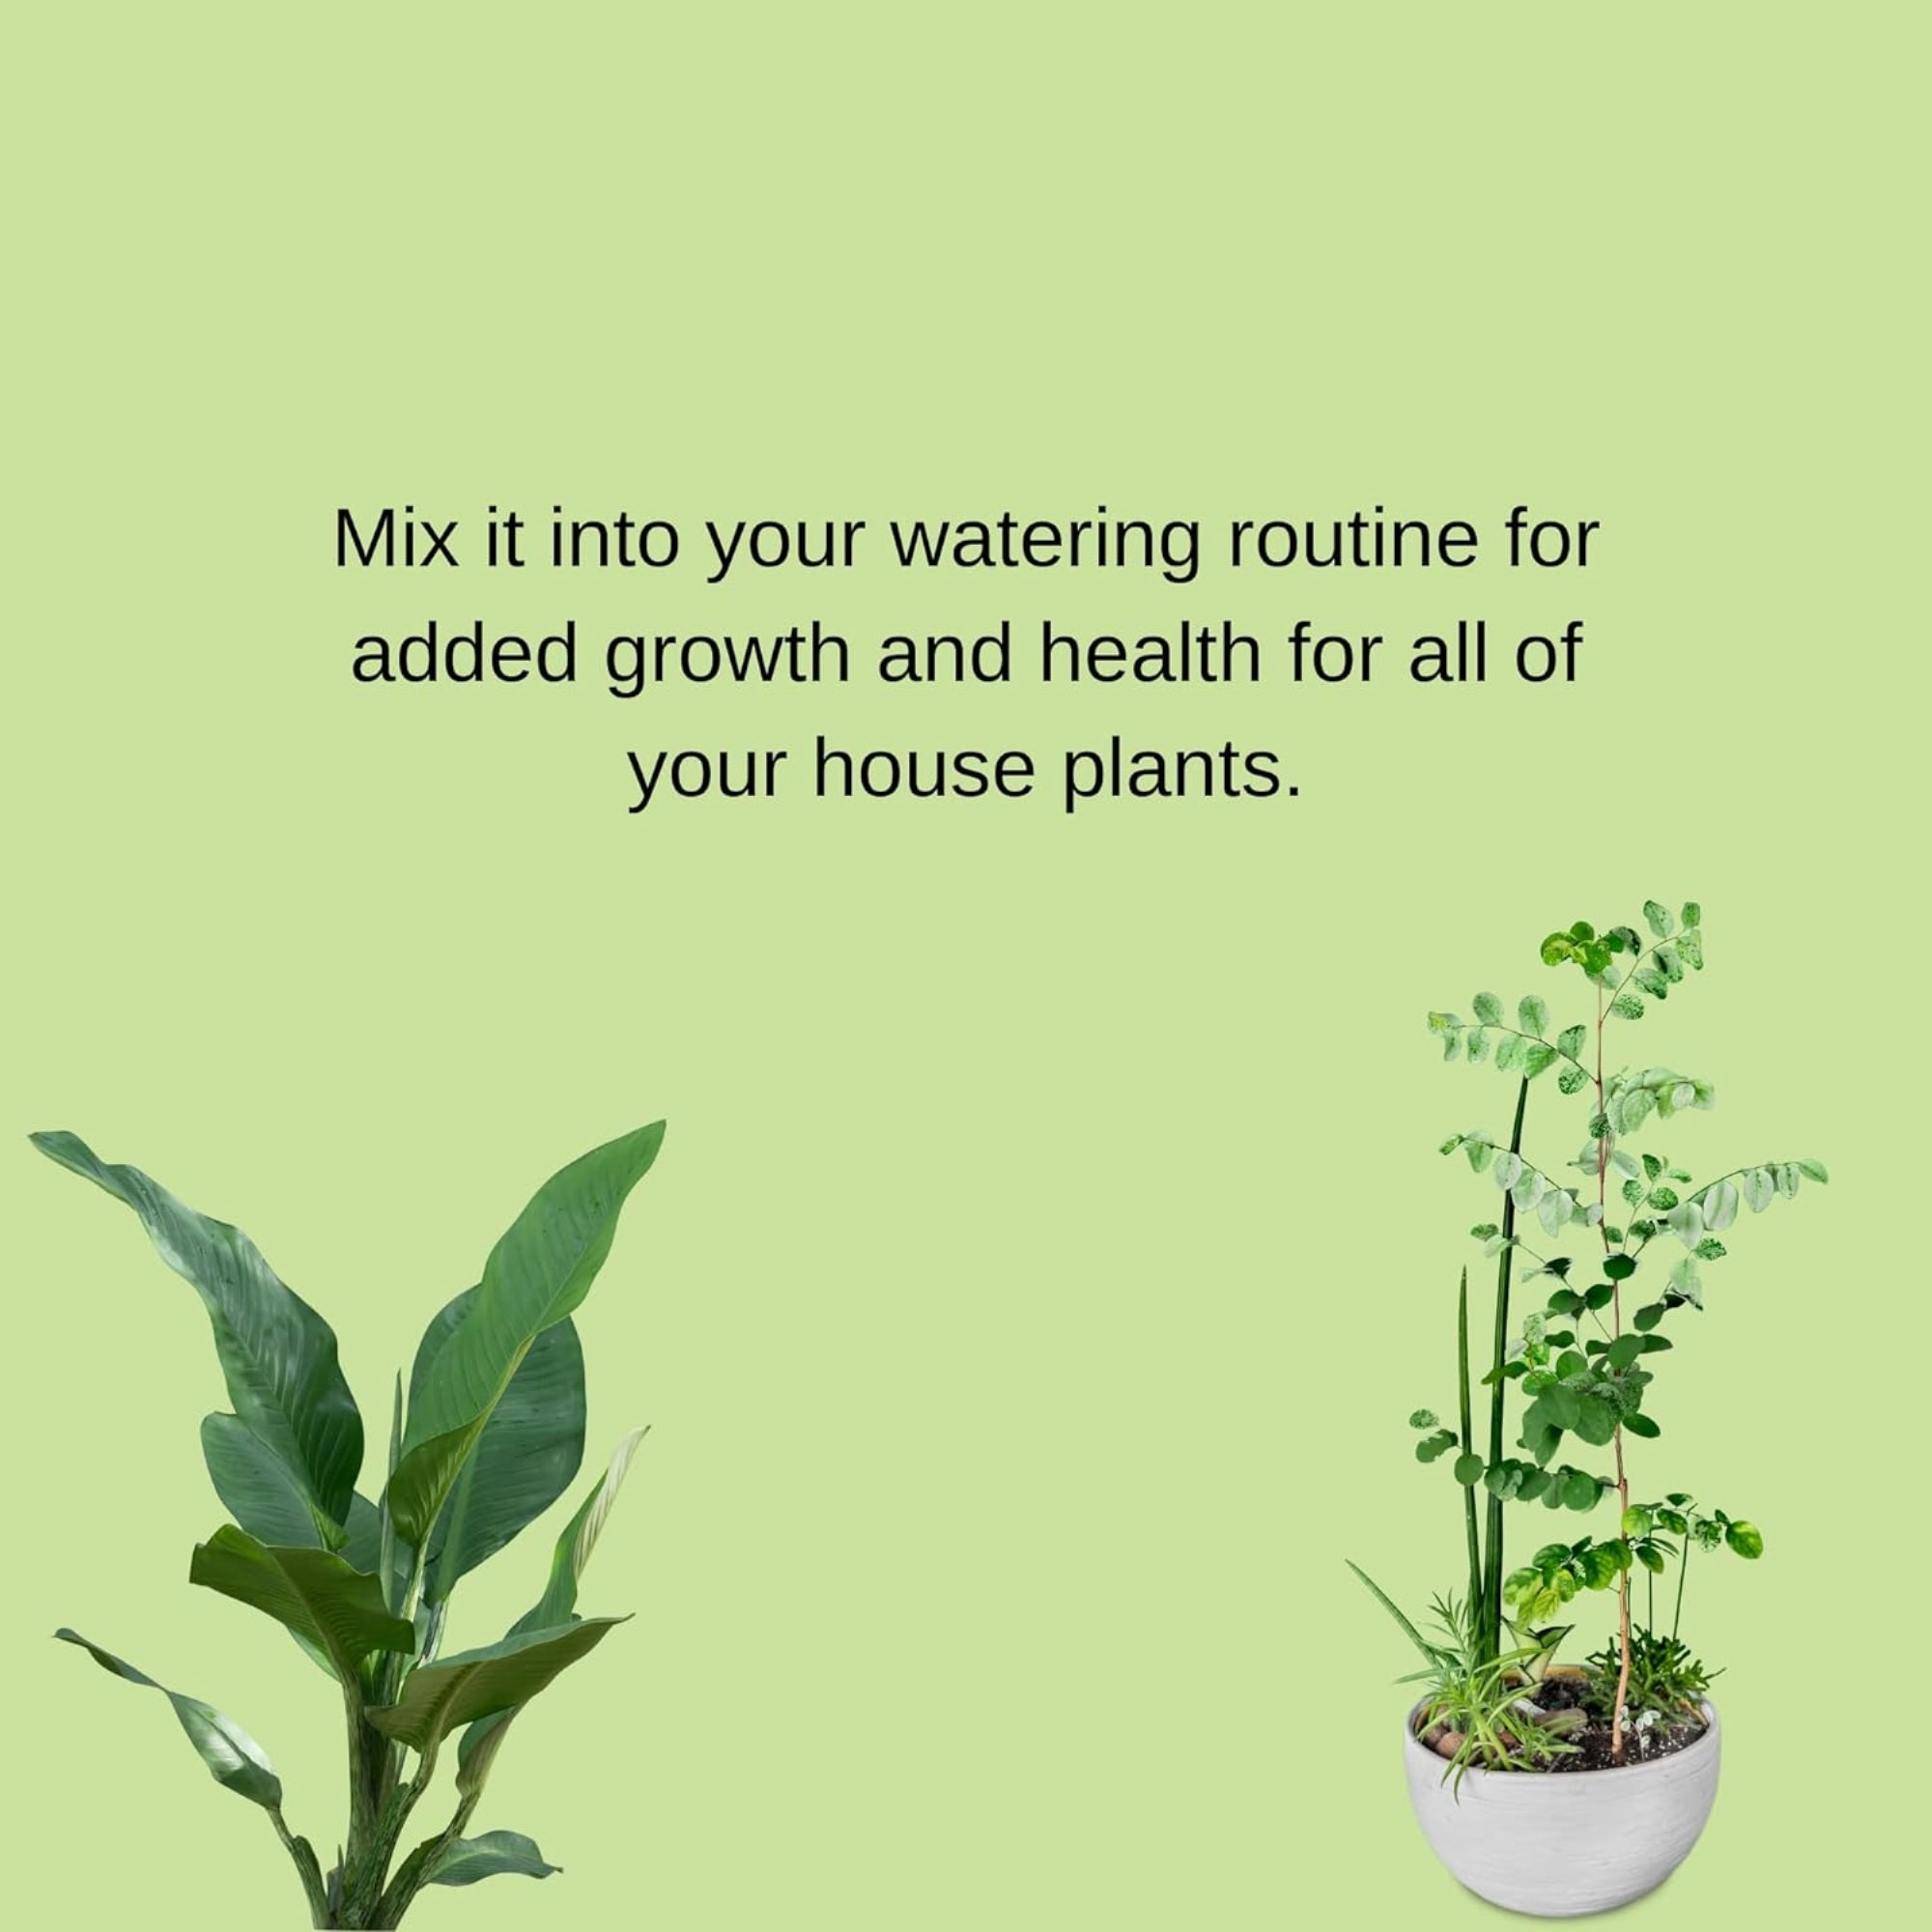 Fertilome Houseplant Hero All Purpose Plant Food 10-10-10 House Plant Fertilizer, 8 oz